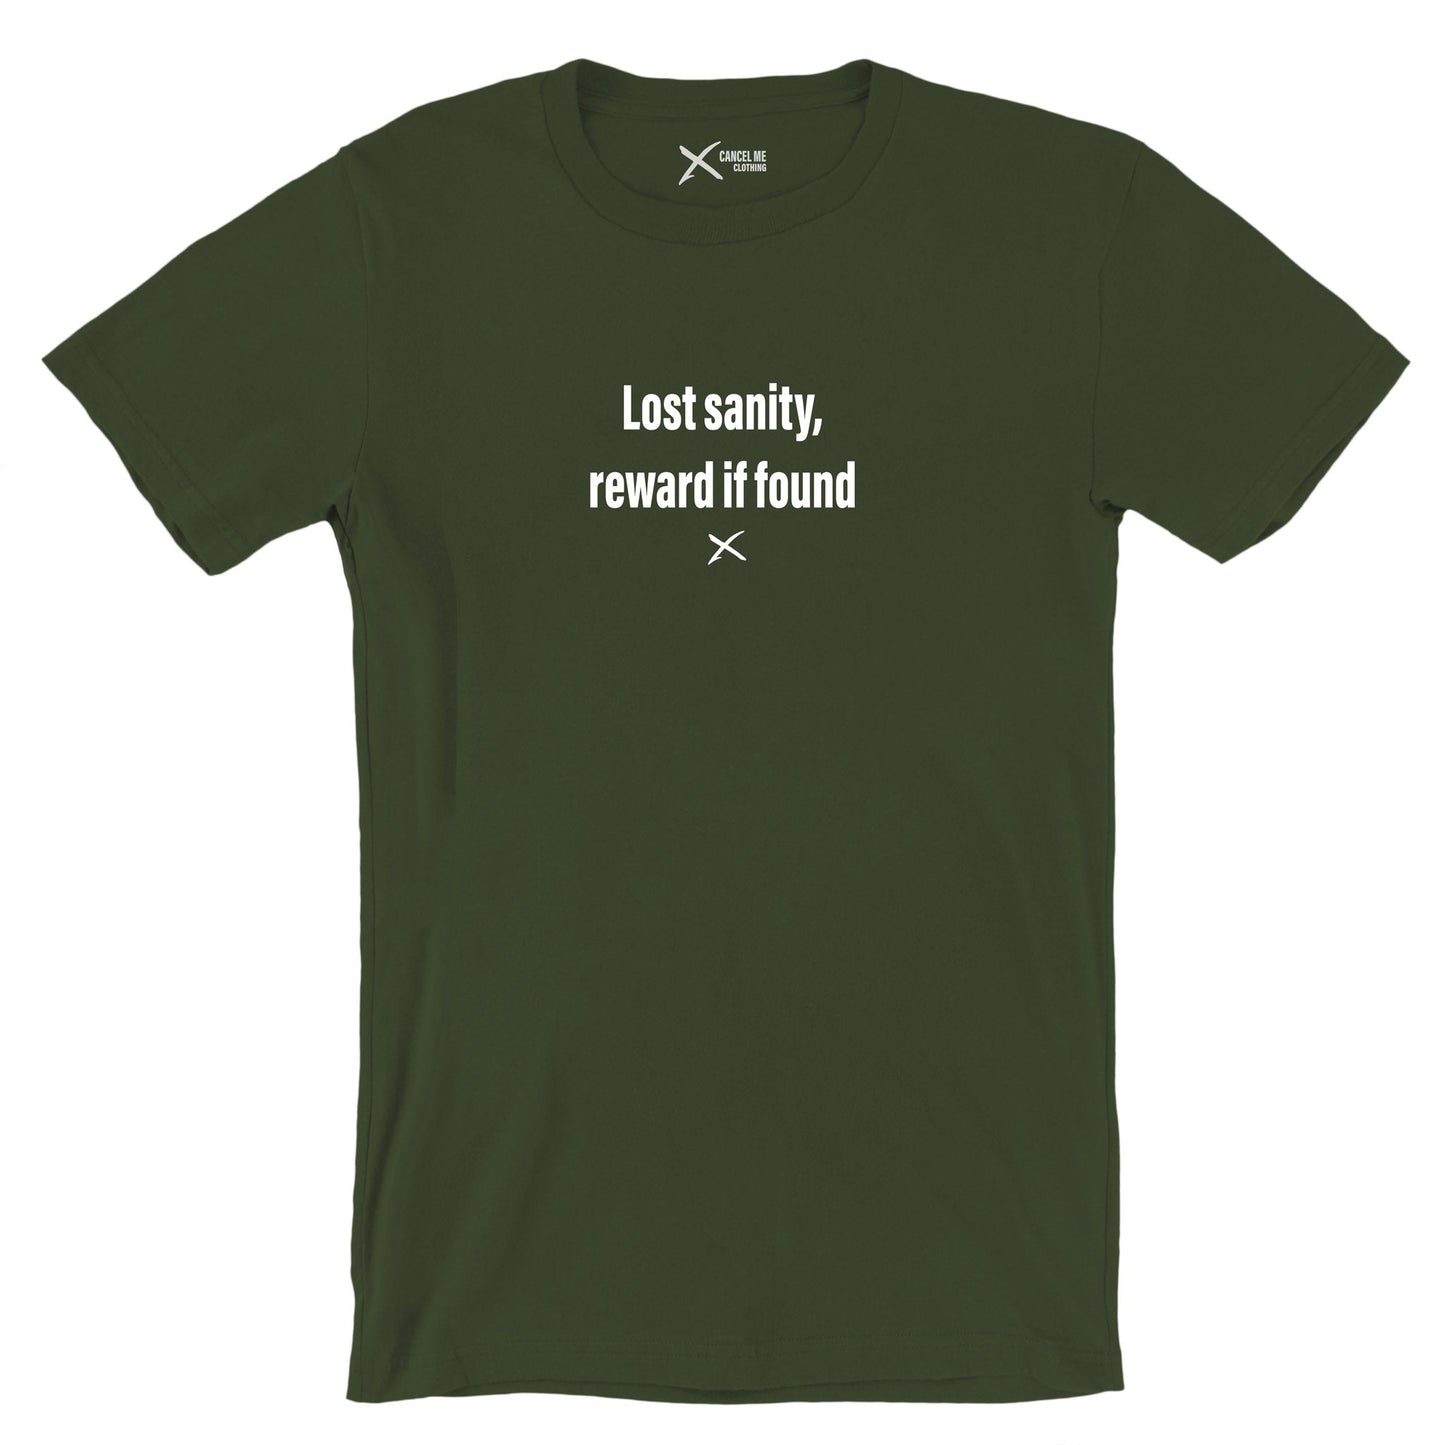 Lost sanity, reward if found - Shirt